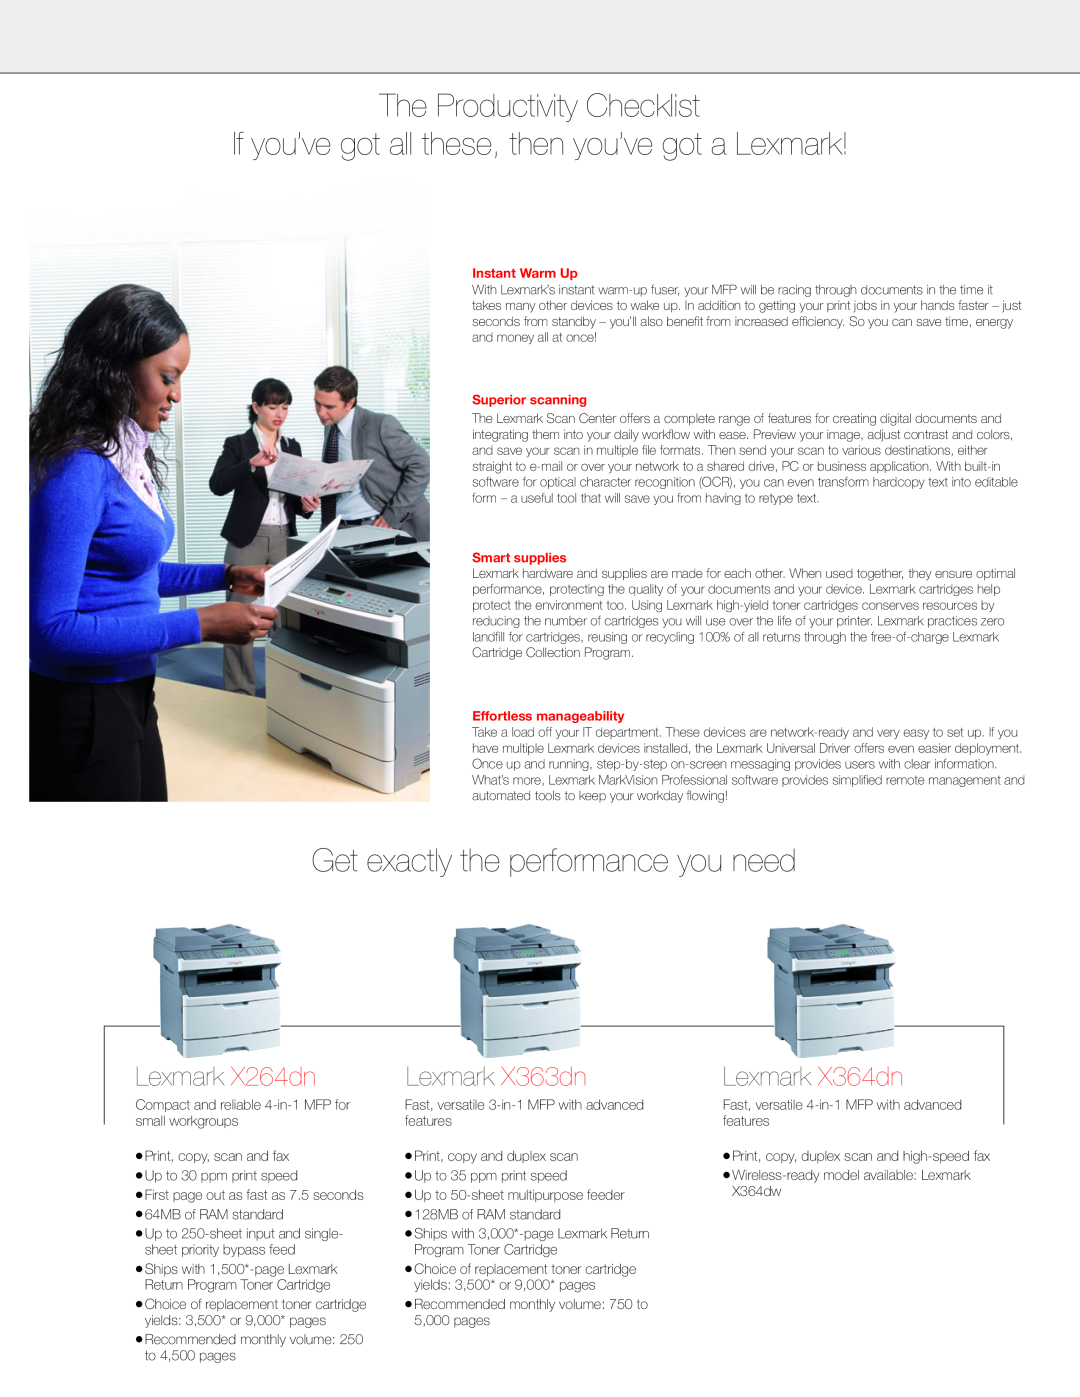 Lexmark X360 manual The Productivity Checklist, Get exactly the performance you need, Lexmark X264dn, Lexmark X363dn 